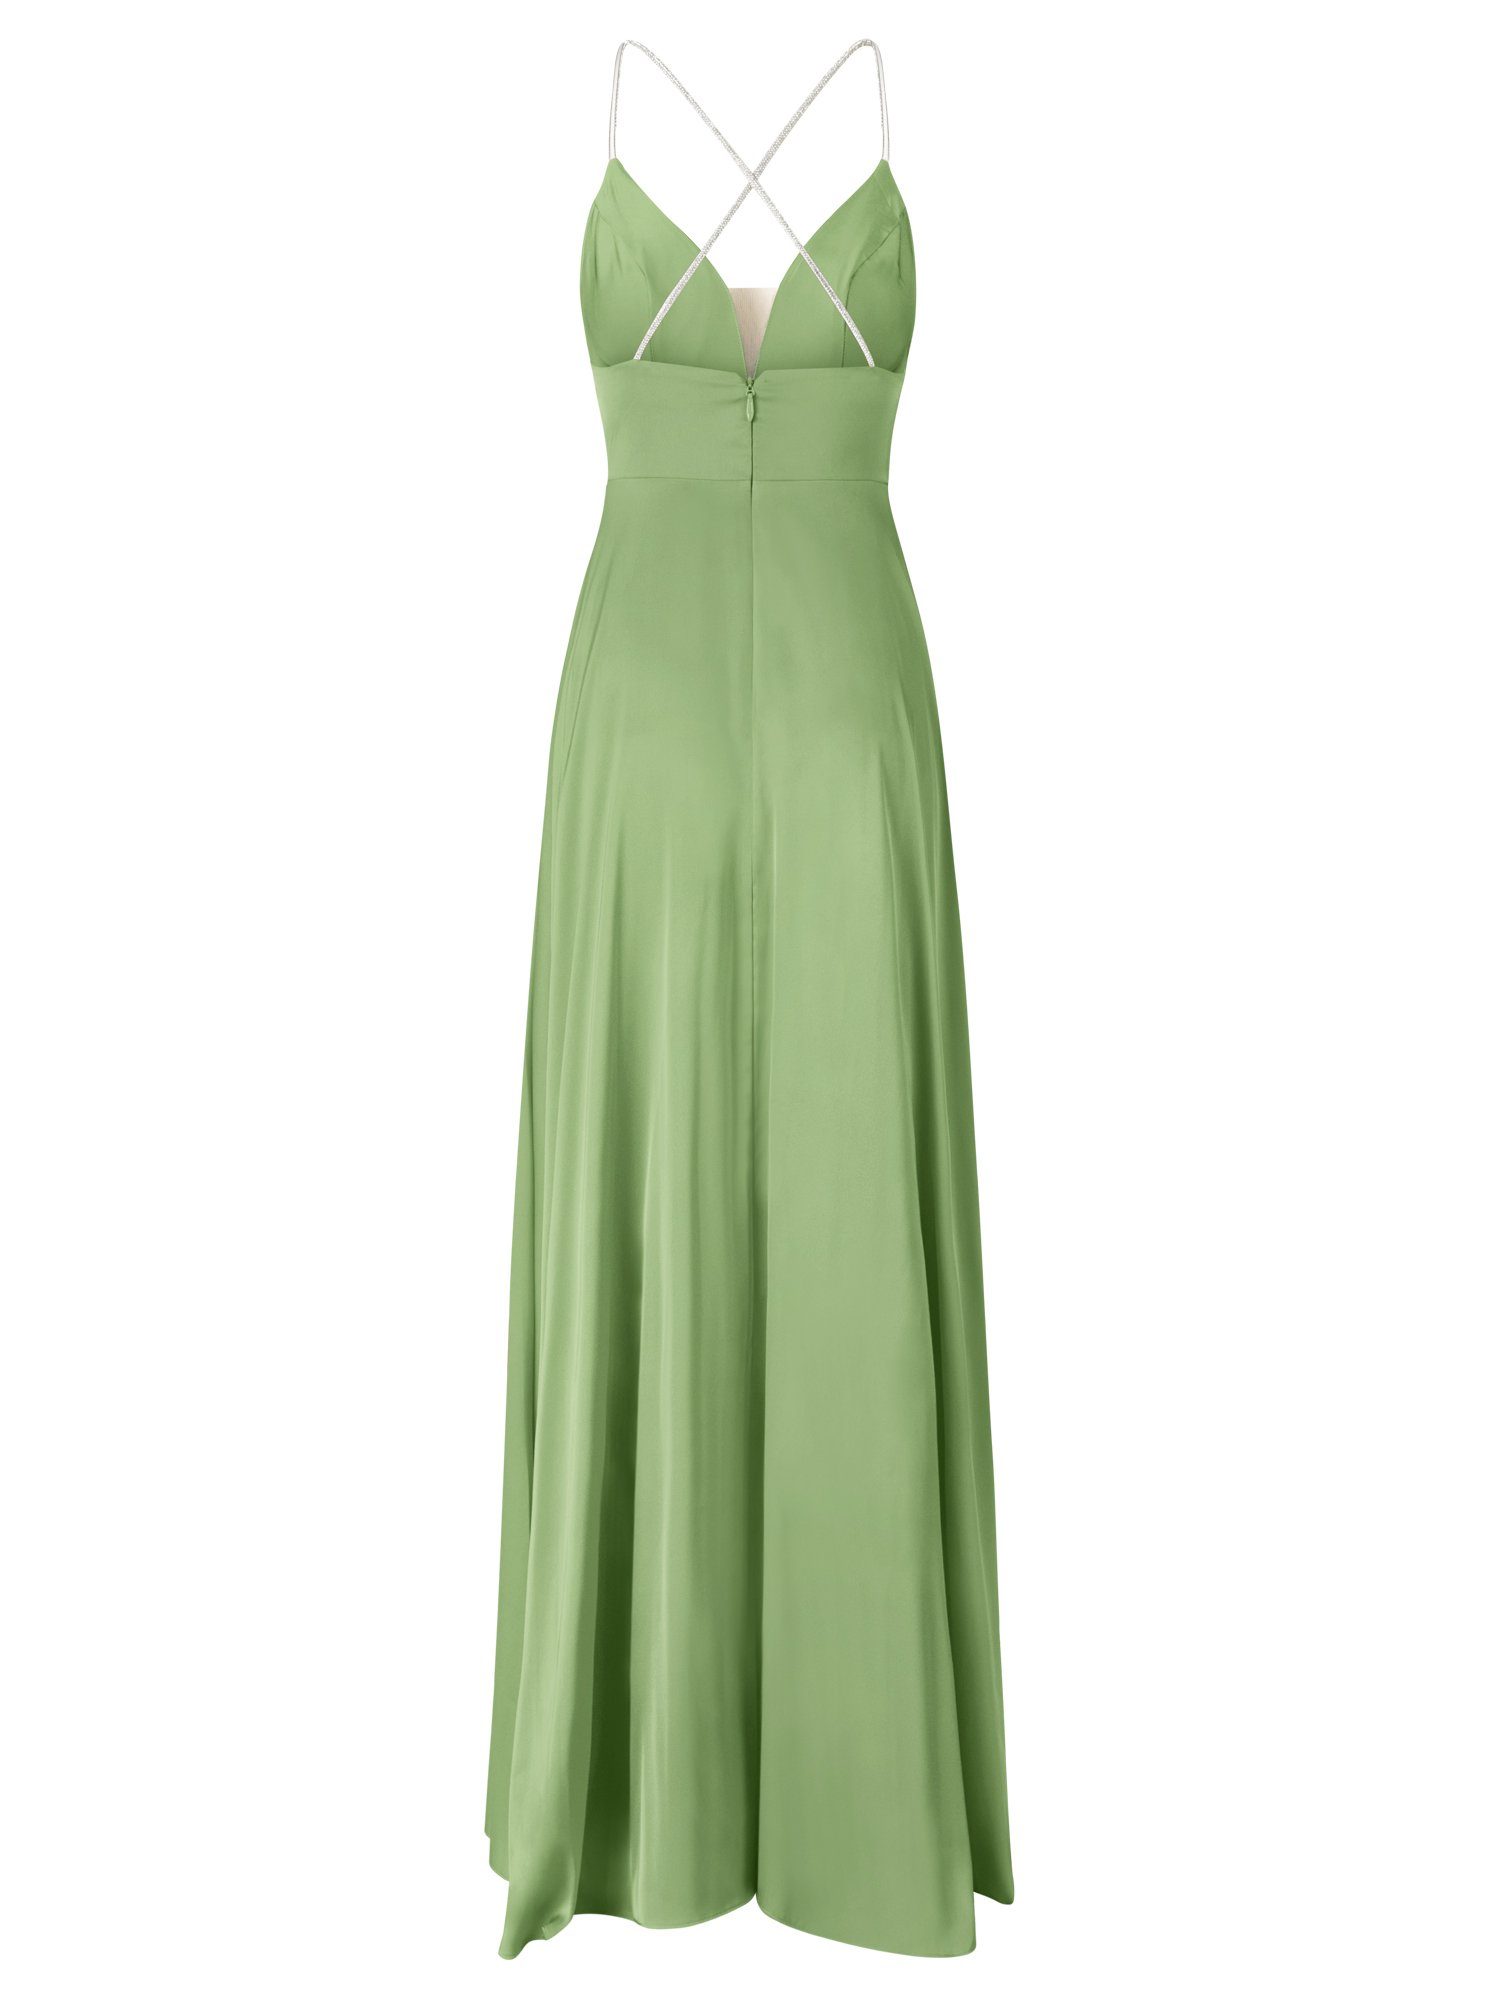 Stil Apart elegantem Abendkleid mit hellgrün